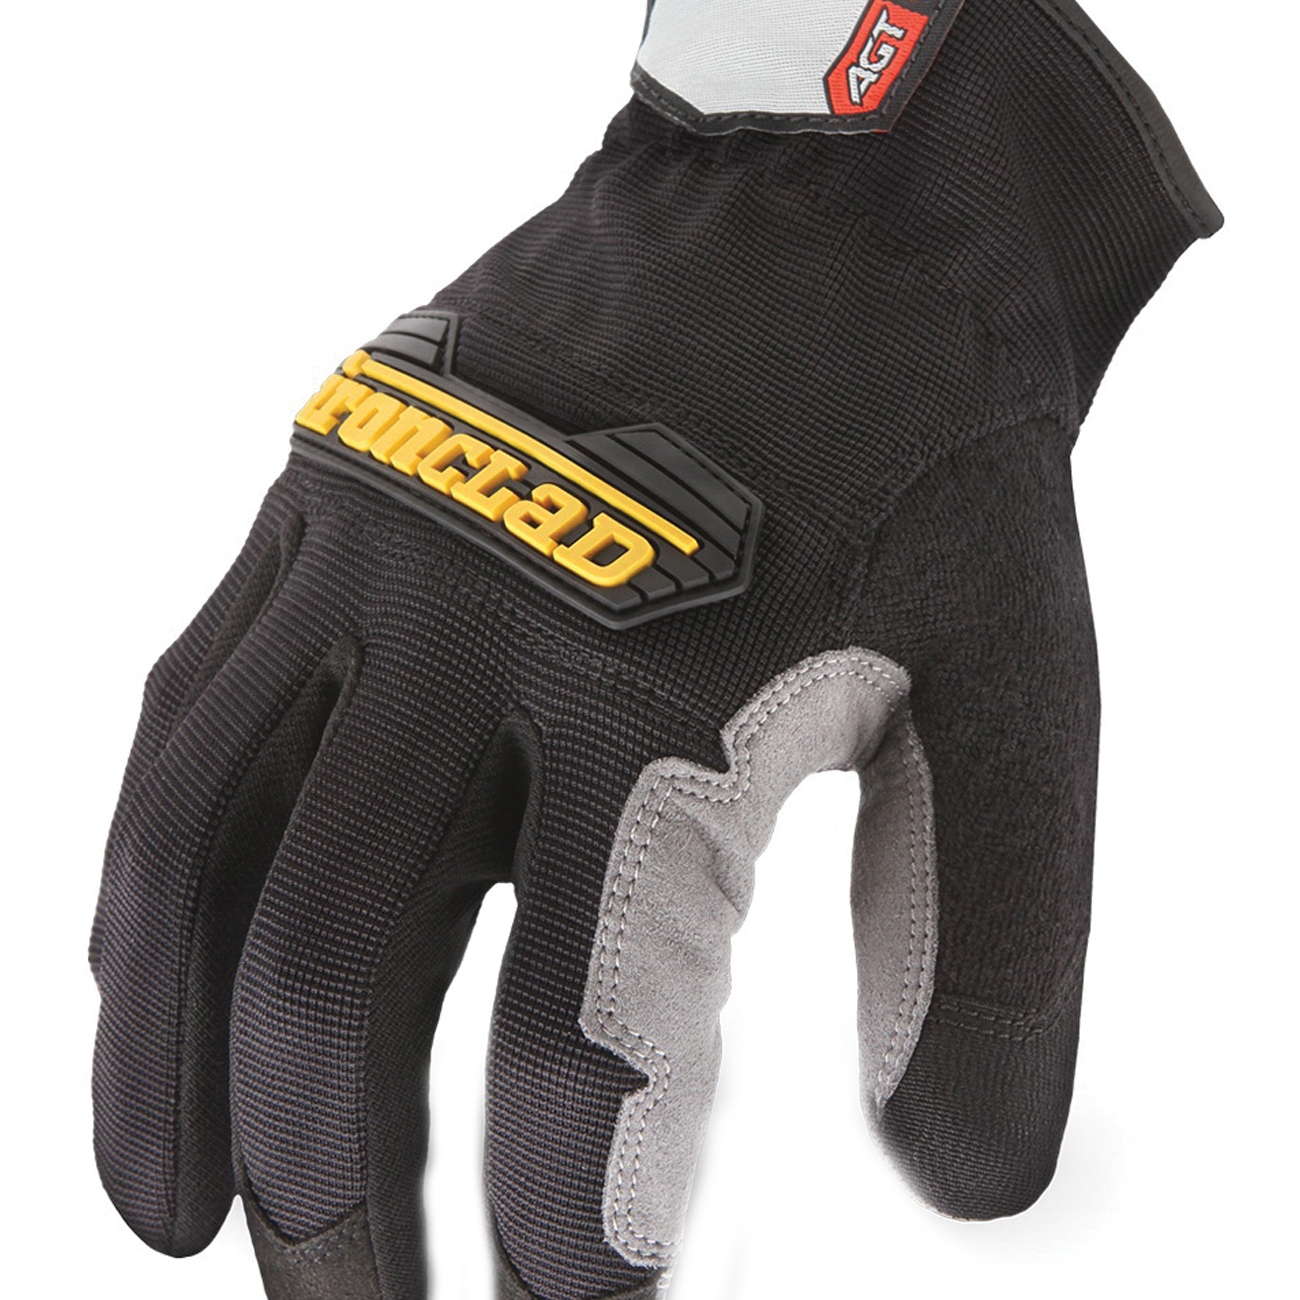 Ironclad WORKFORCE WFG-04-L Gloves, Men's, L, 18 in L, Open Cuff, Spandex/Suede, Black/Gray - 1